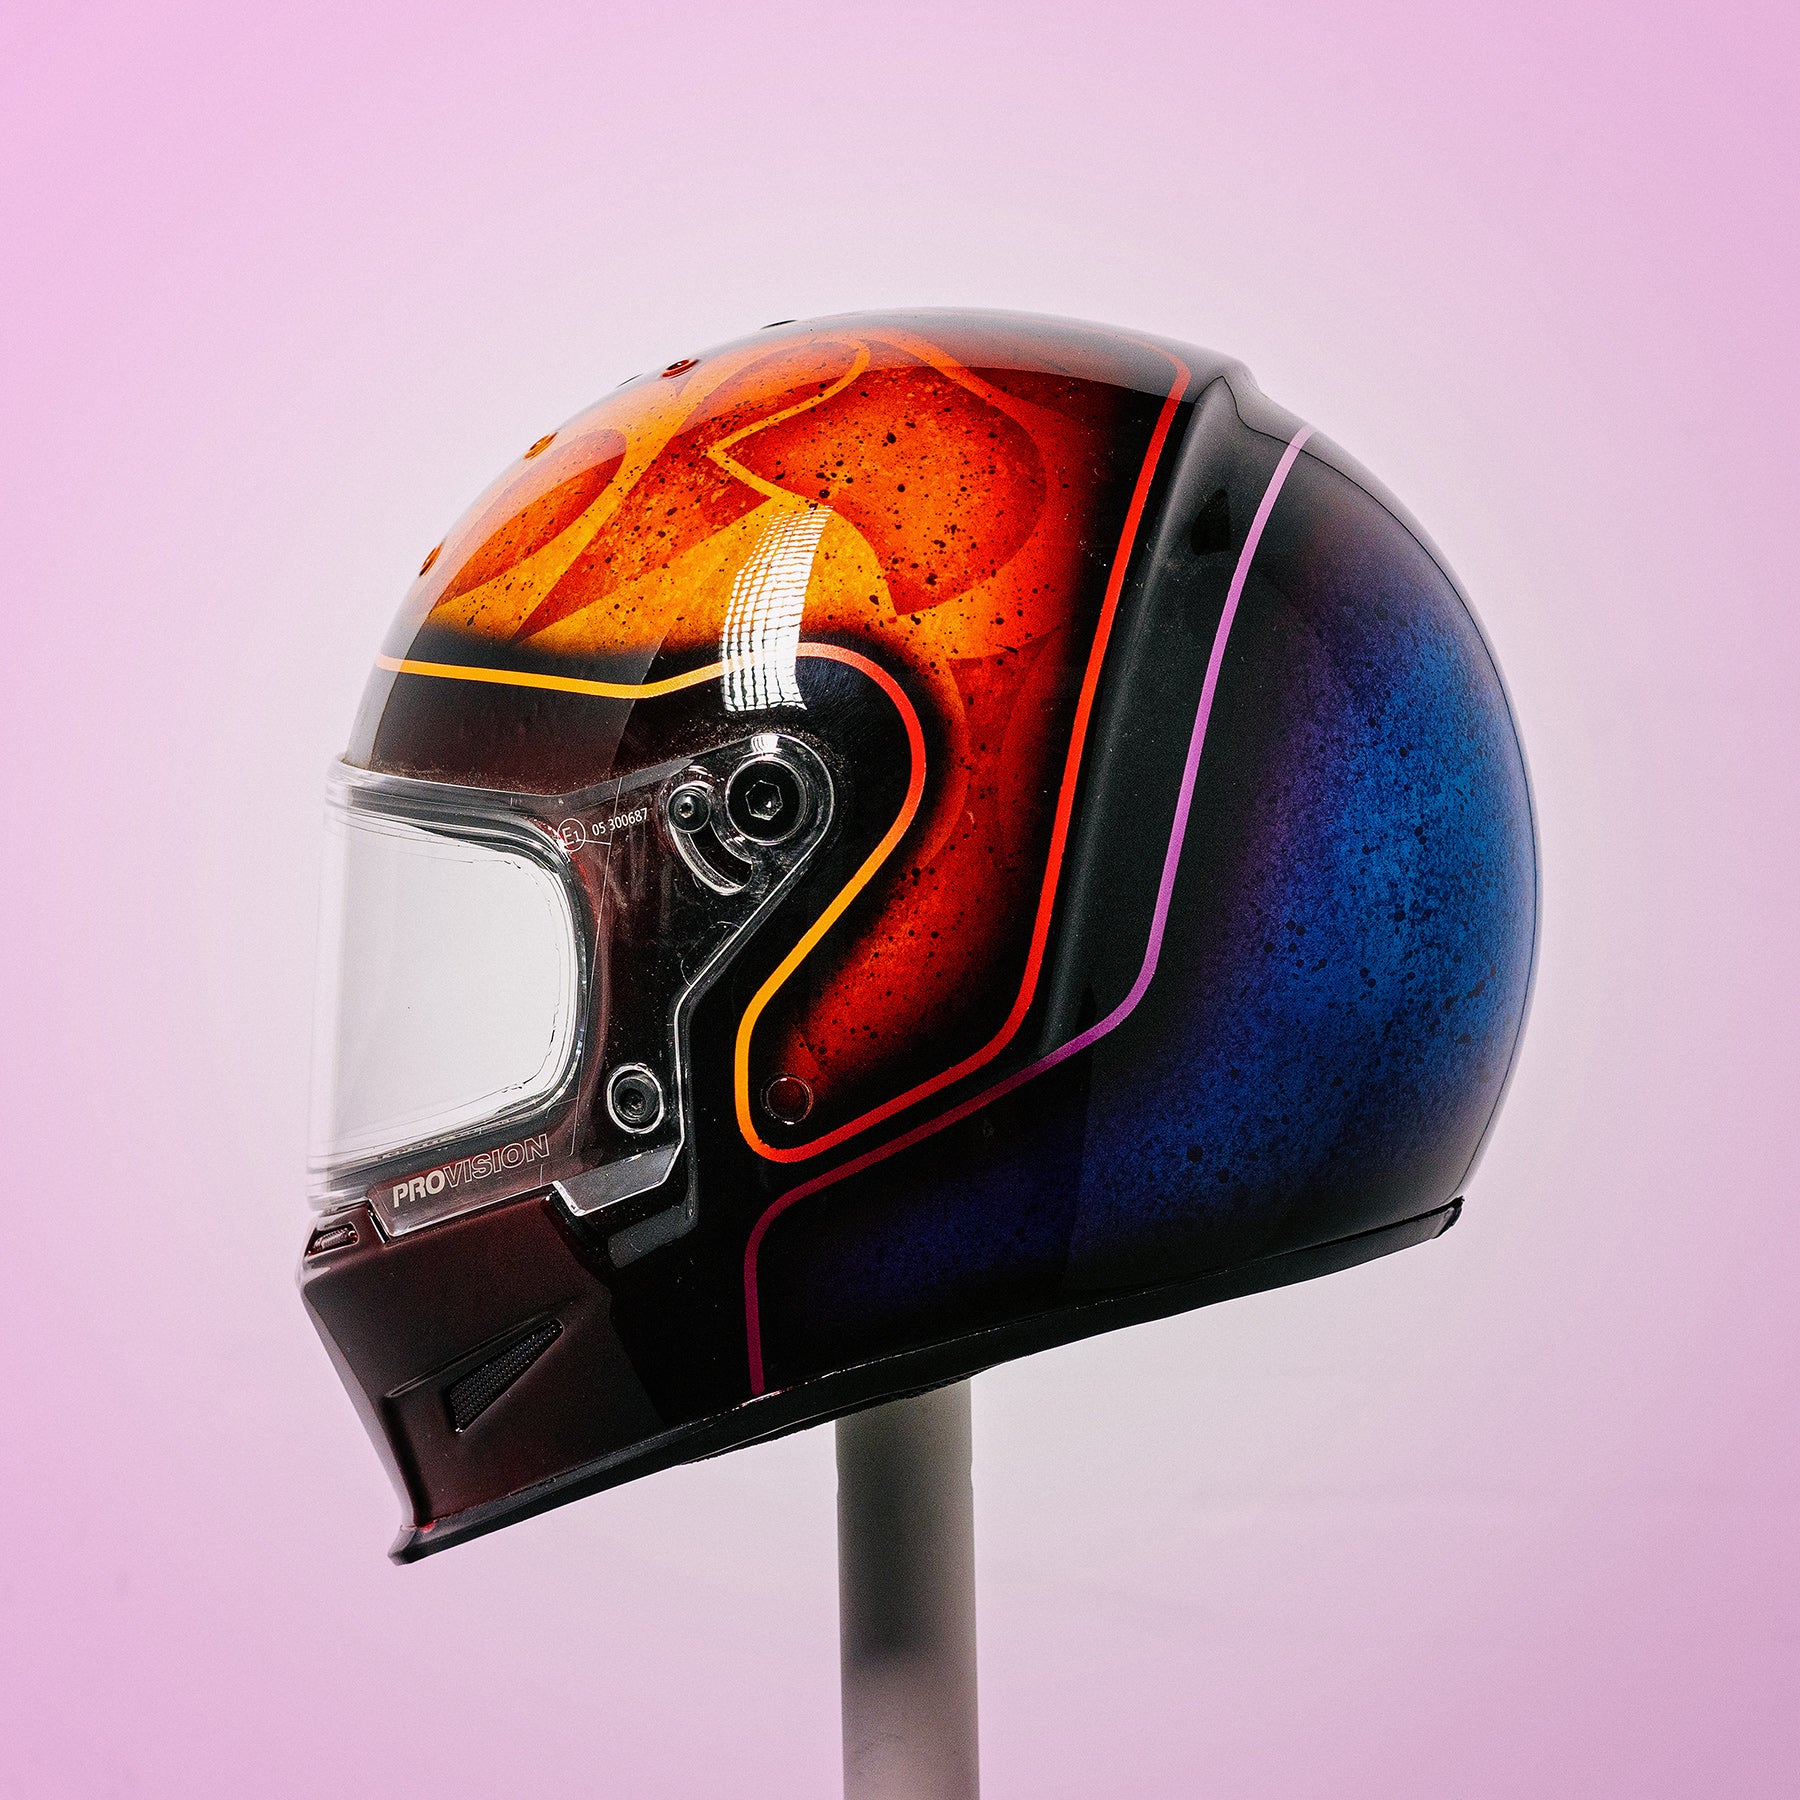 Trippy Ten helmet art show Pittsburgh Glory Daze motorcycle show Bell Helmets Barry Hooper